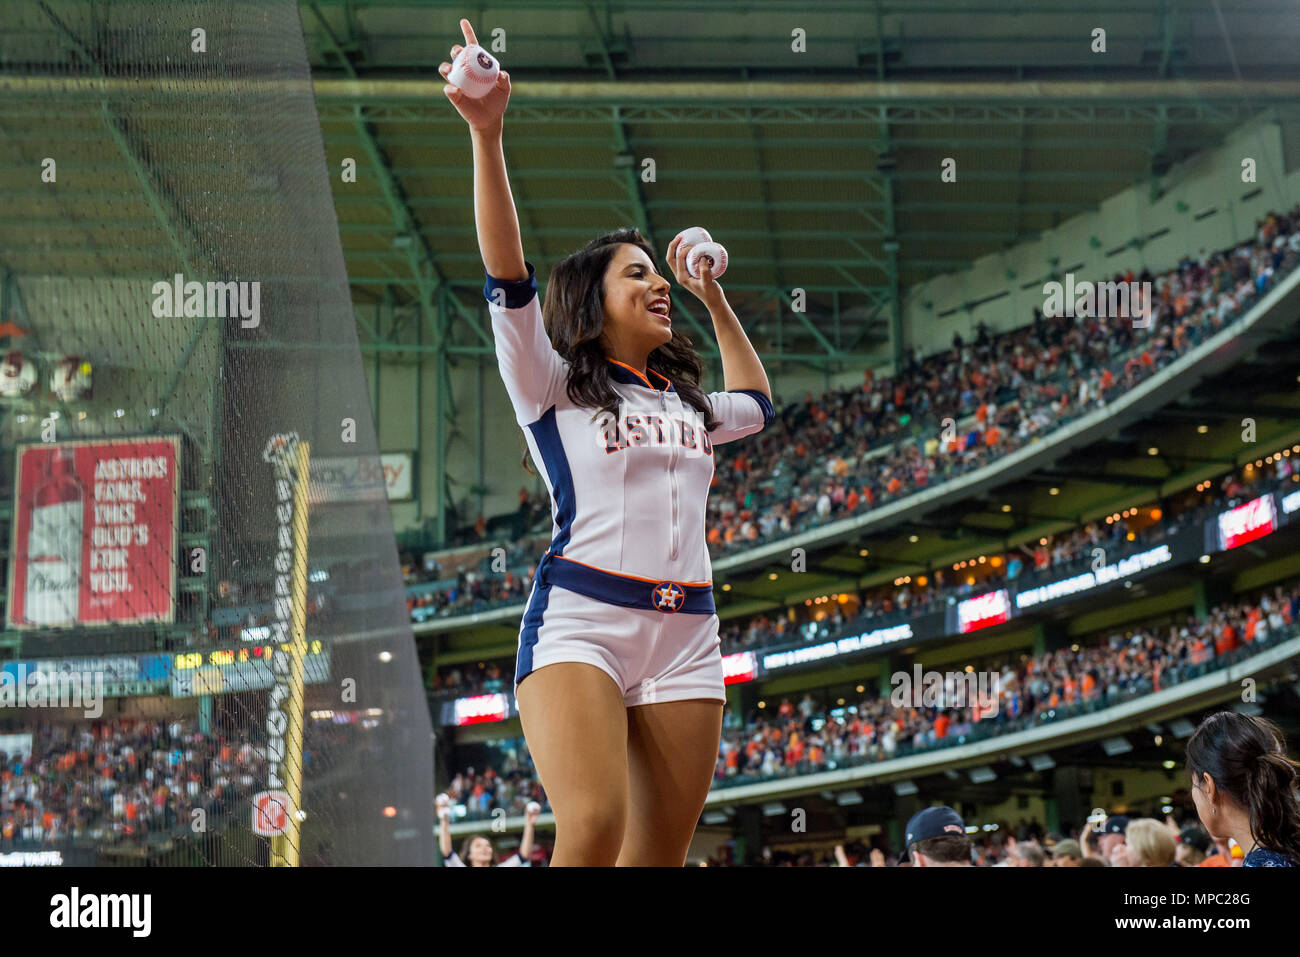 Houston Astros Shooting Stars cheerleaders perform in the 5th